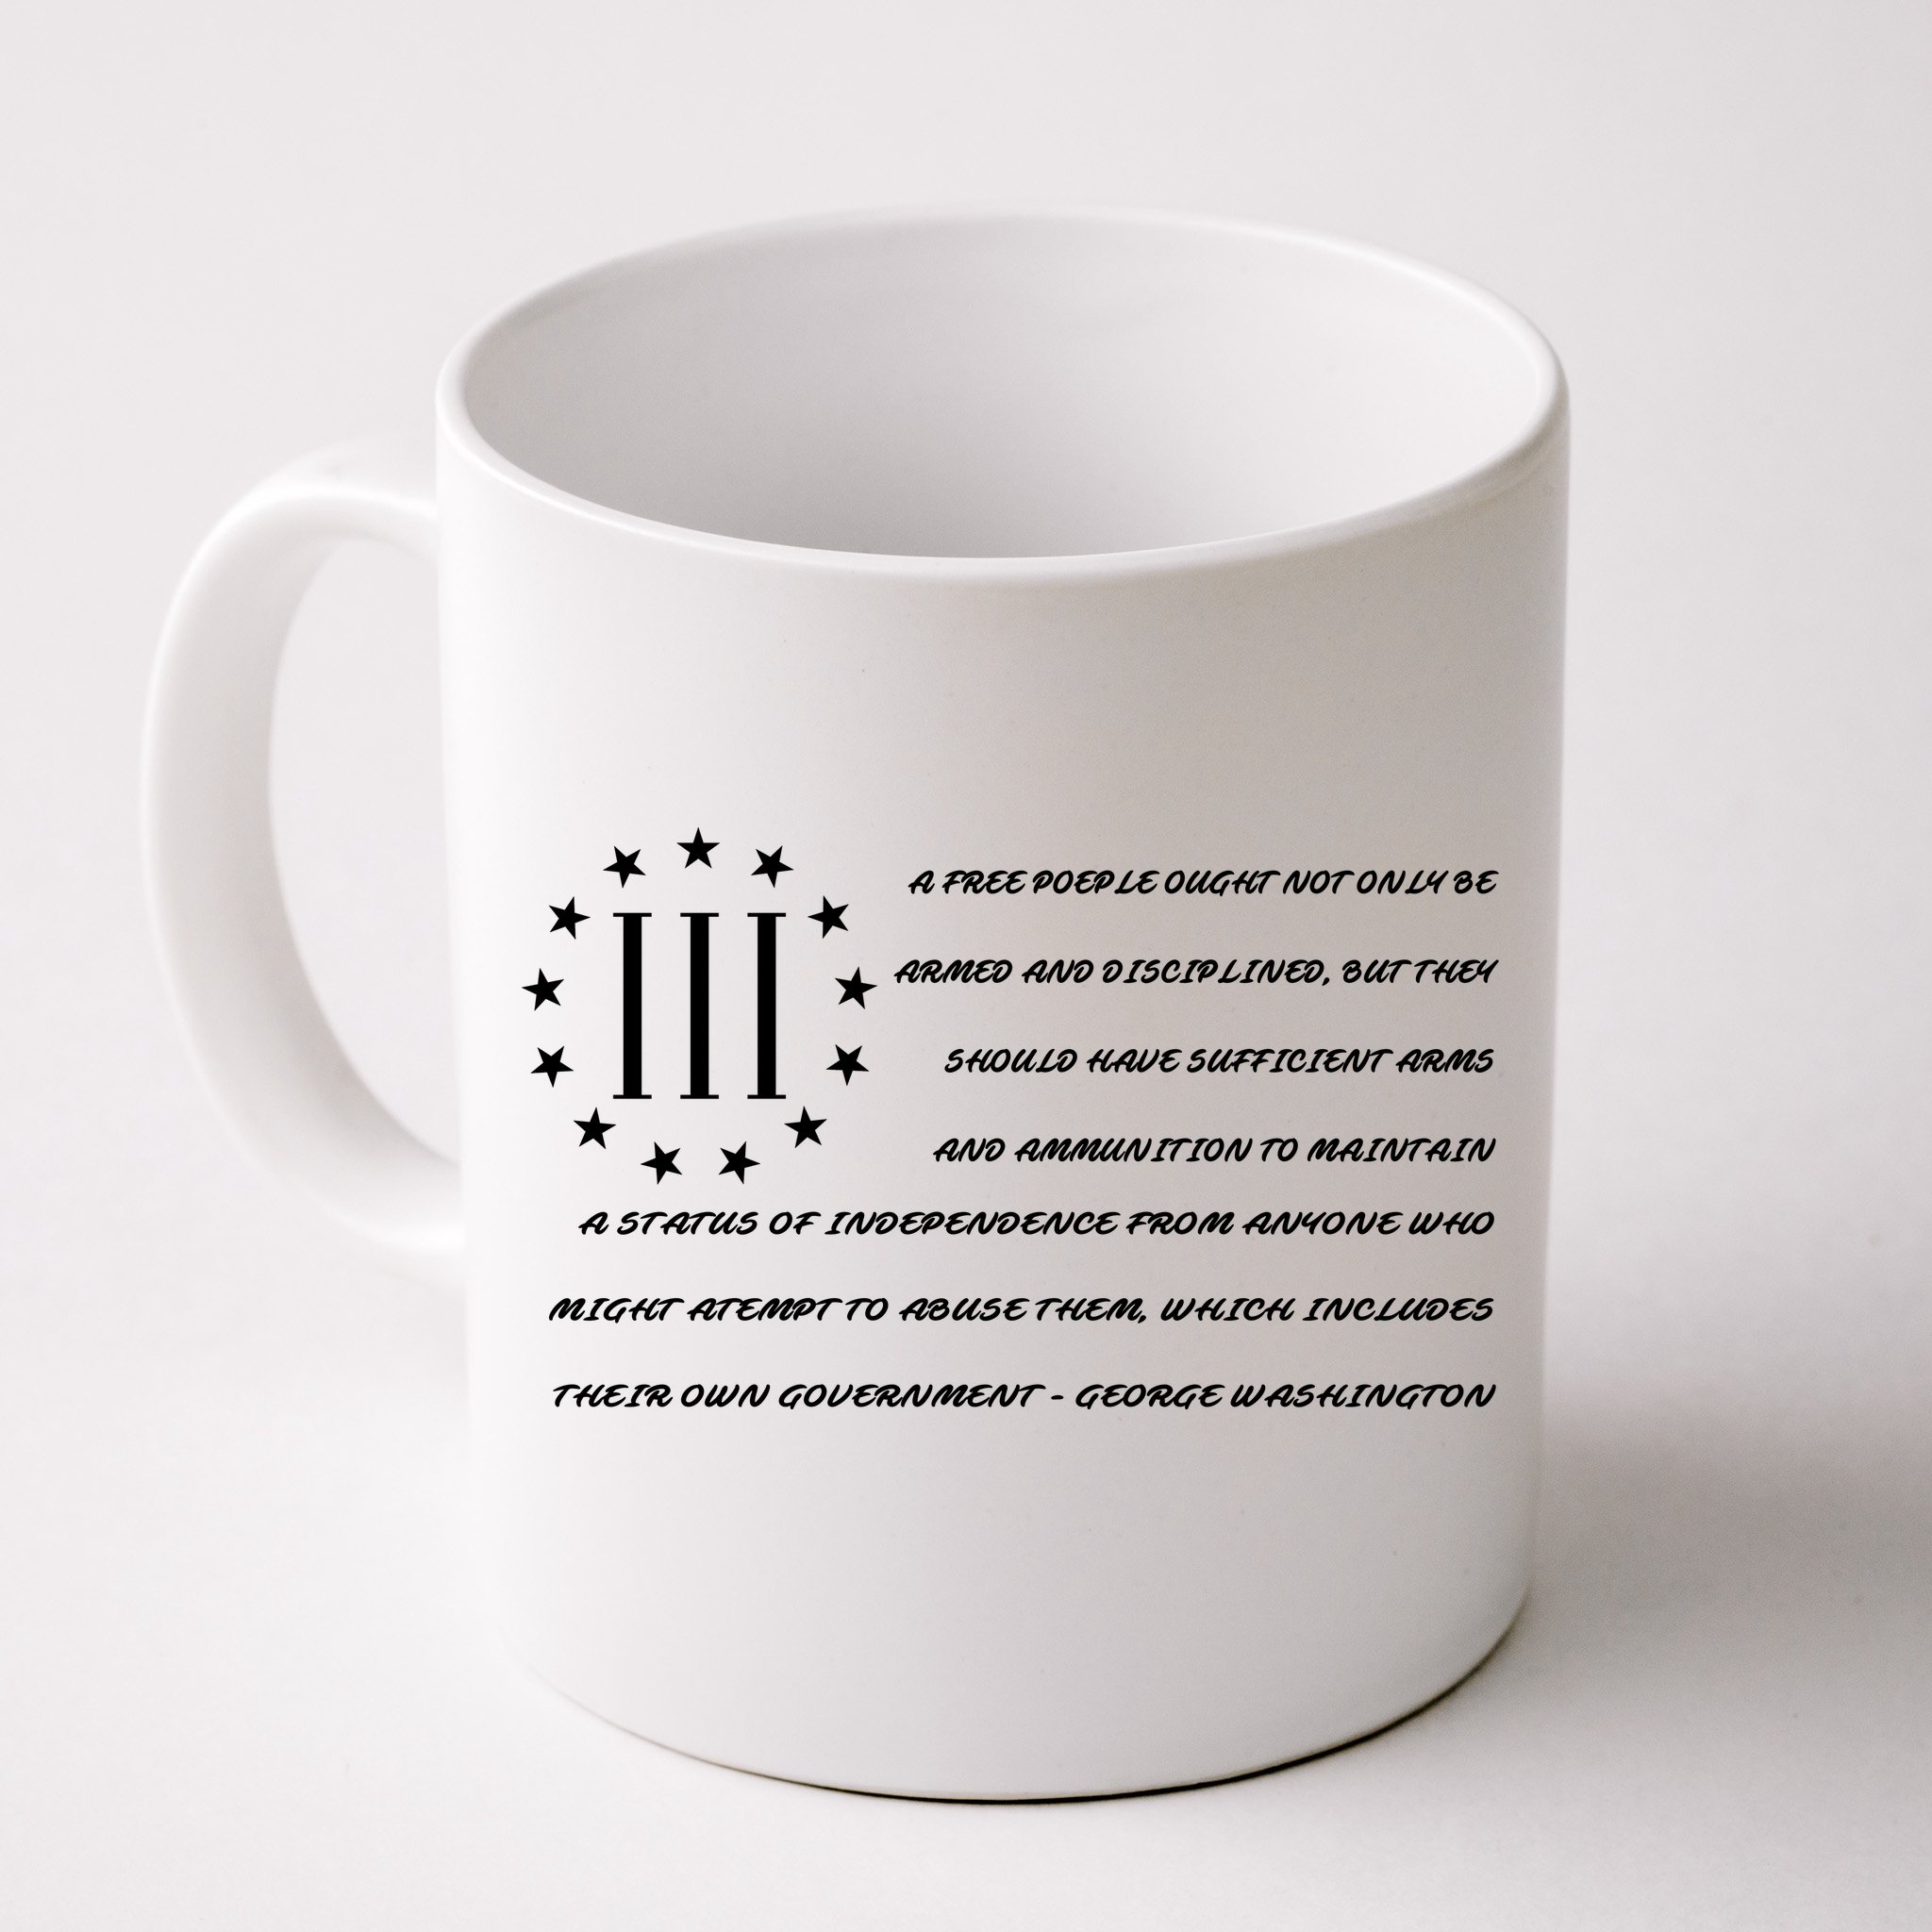 George Washington Coffee Mug Funny Brexit 1776 American Revolution Gift 